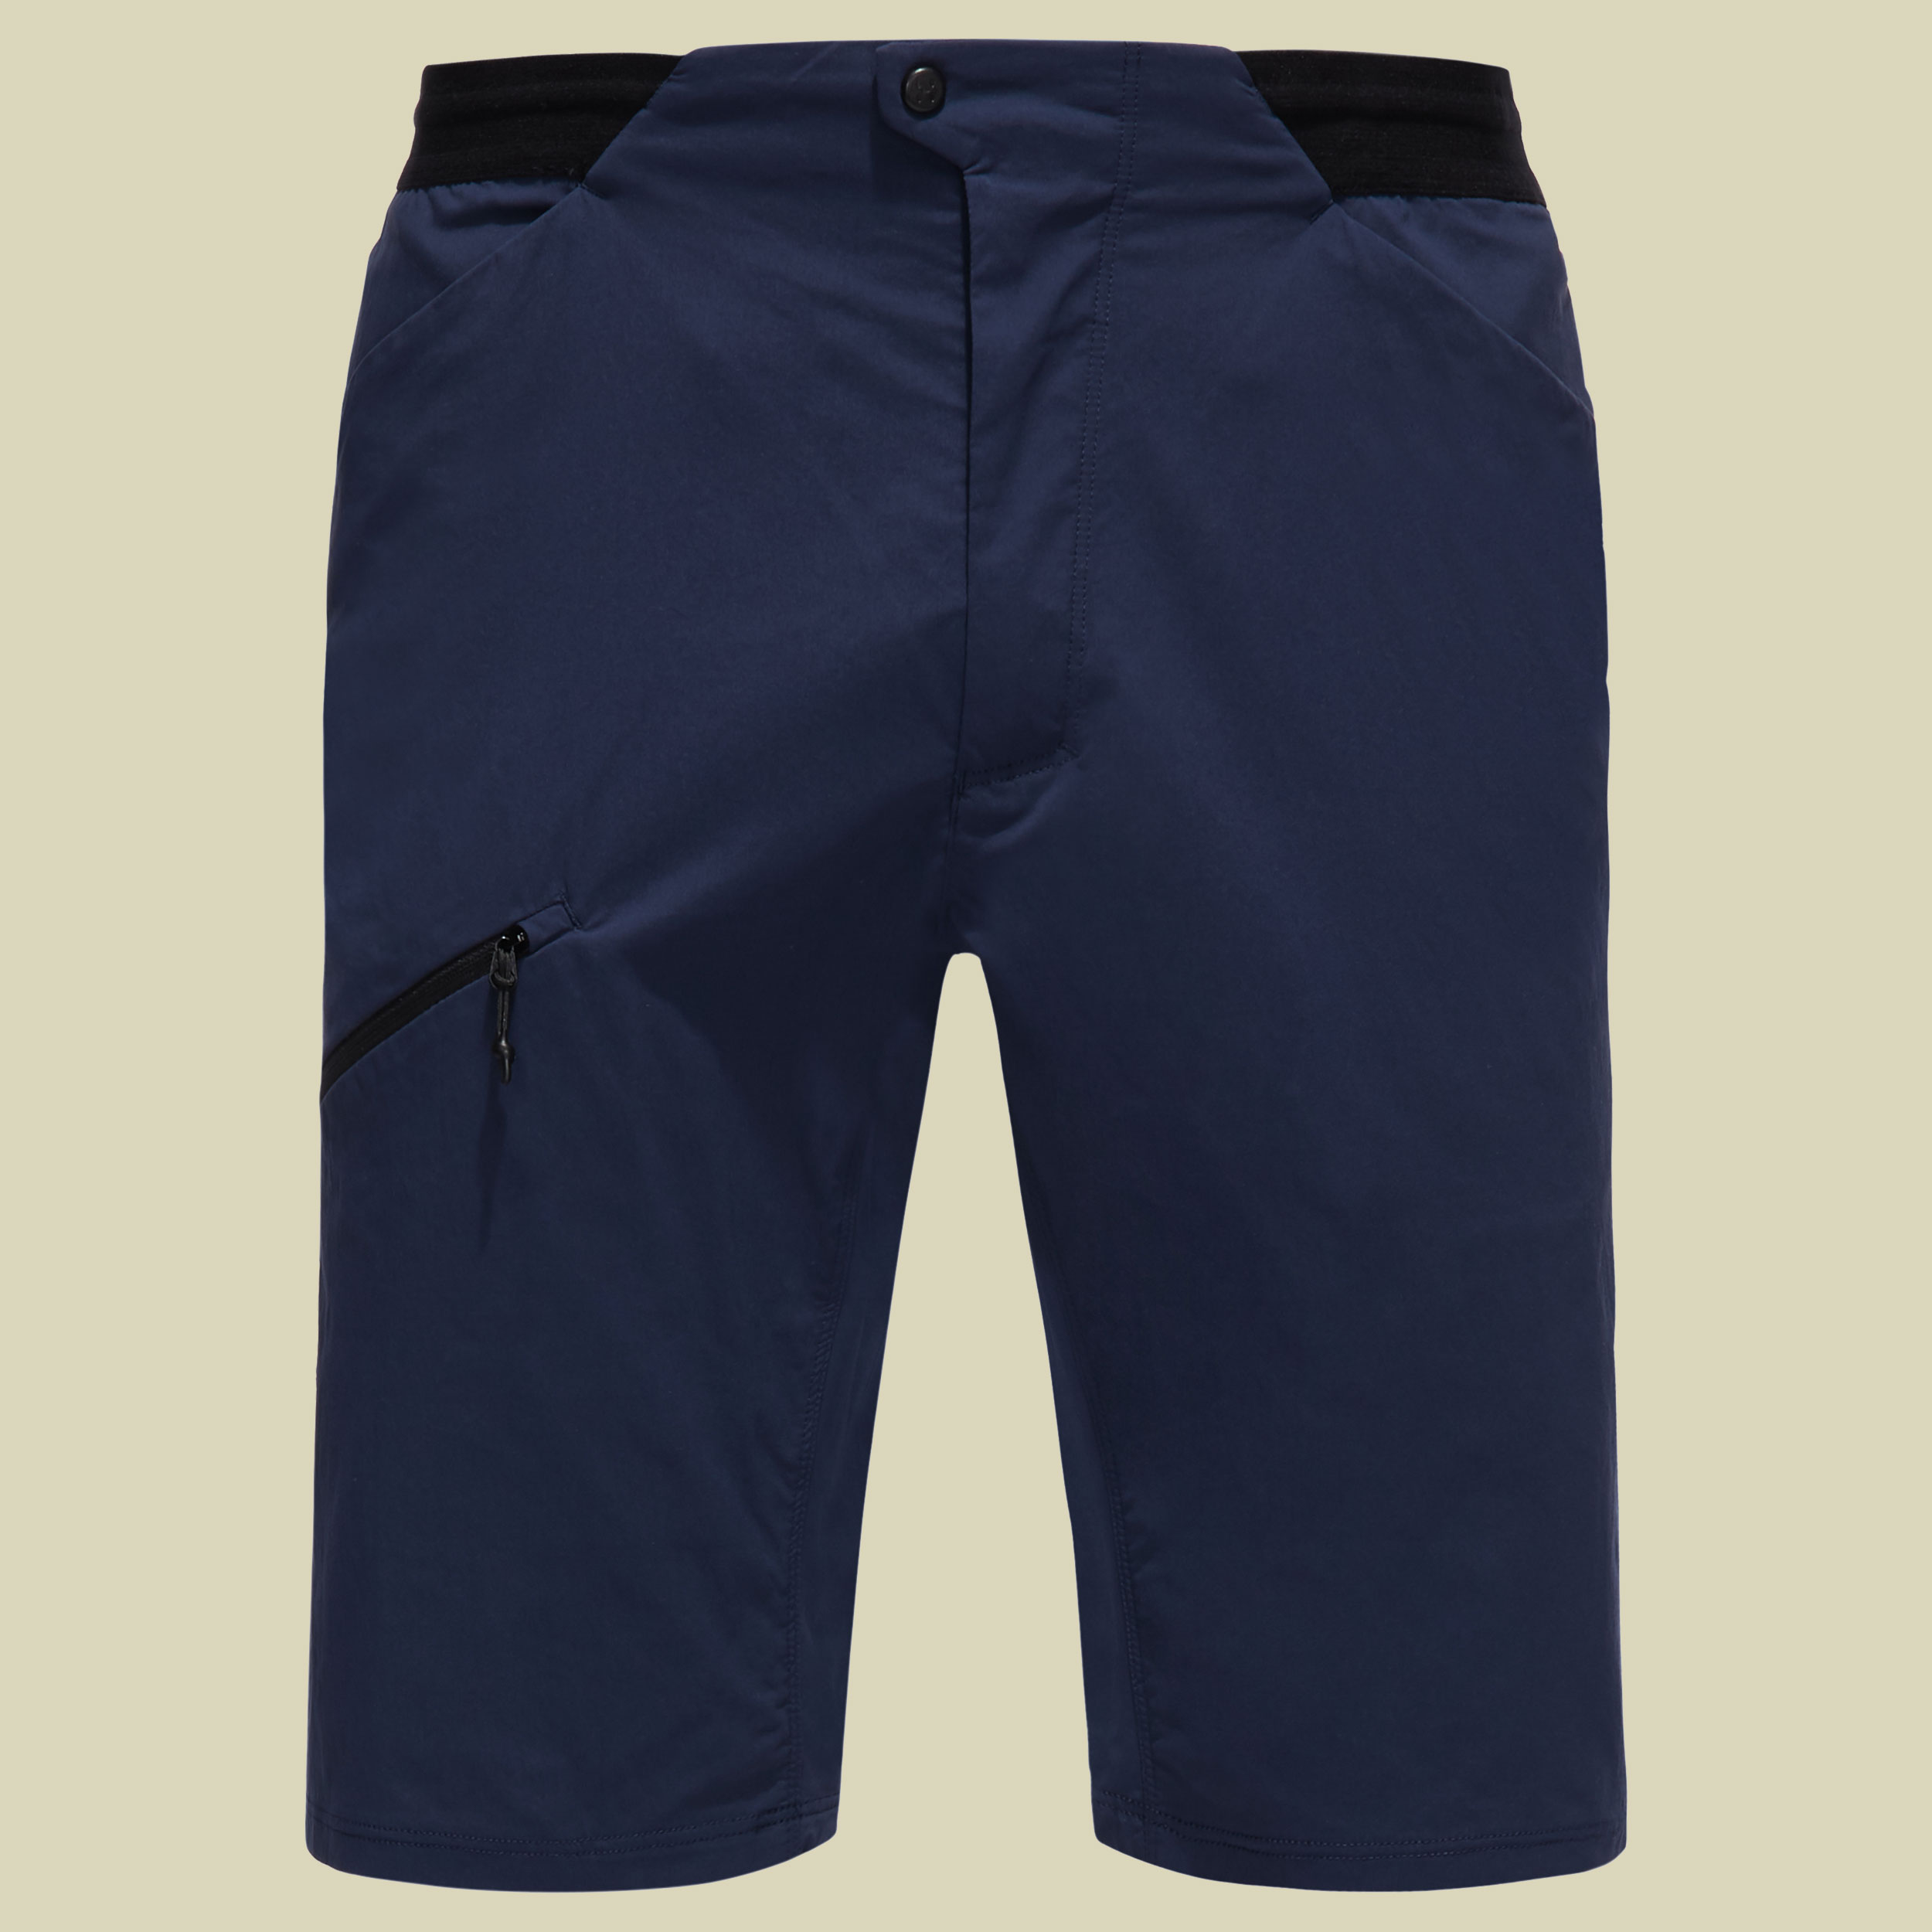 L.I.M. Fuse Shorts Men 54 blau - tarn blue